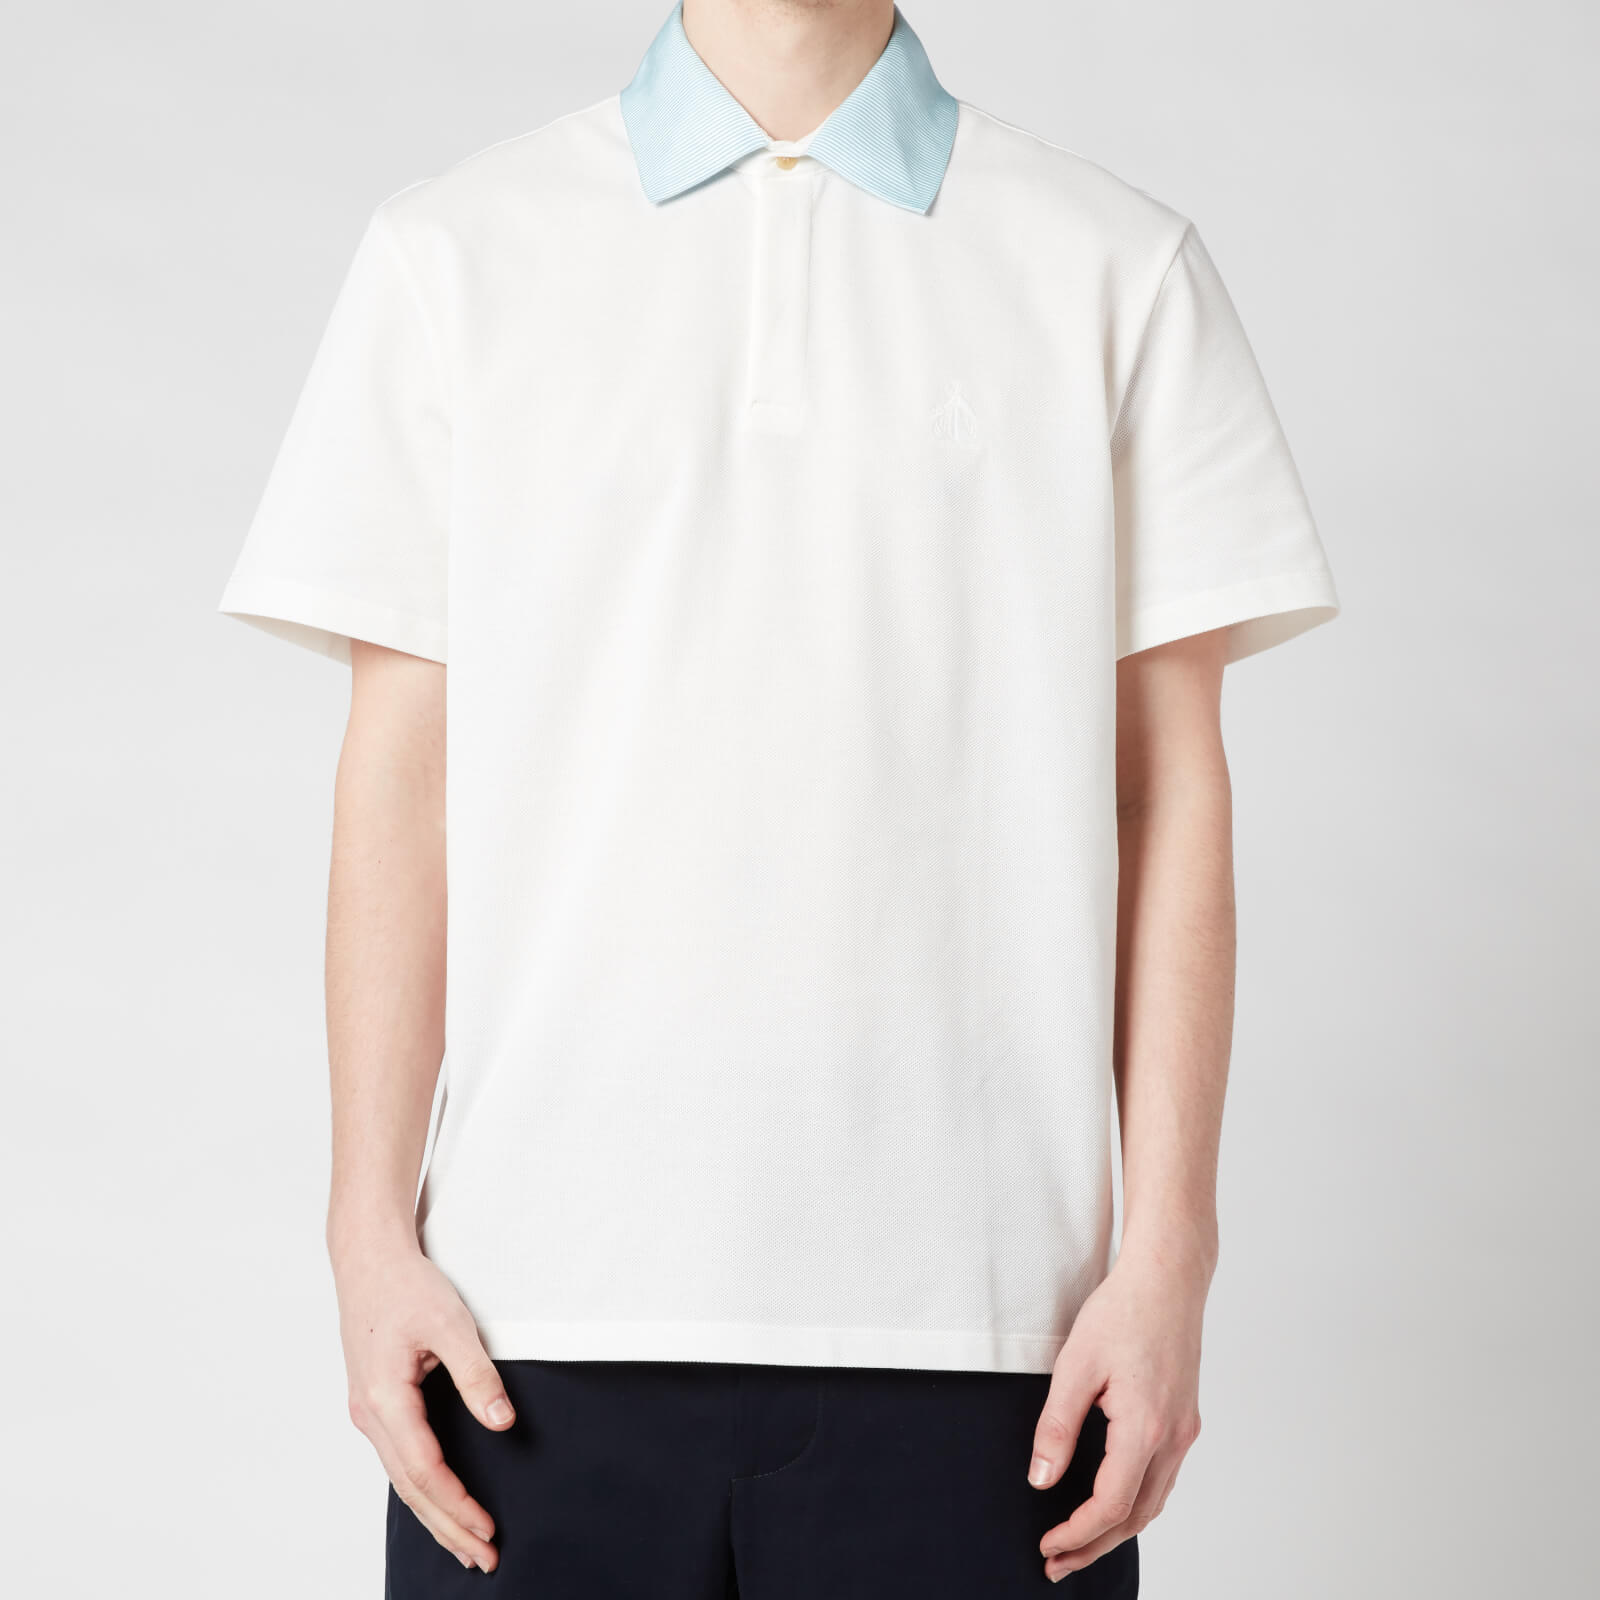 Lanvin Men's Contrast Collar Polo Shirt - Off White - S